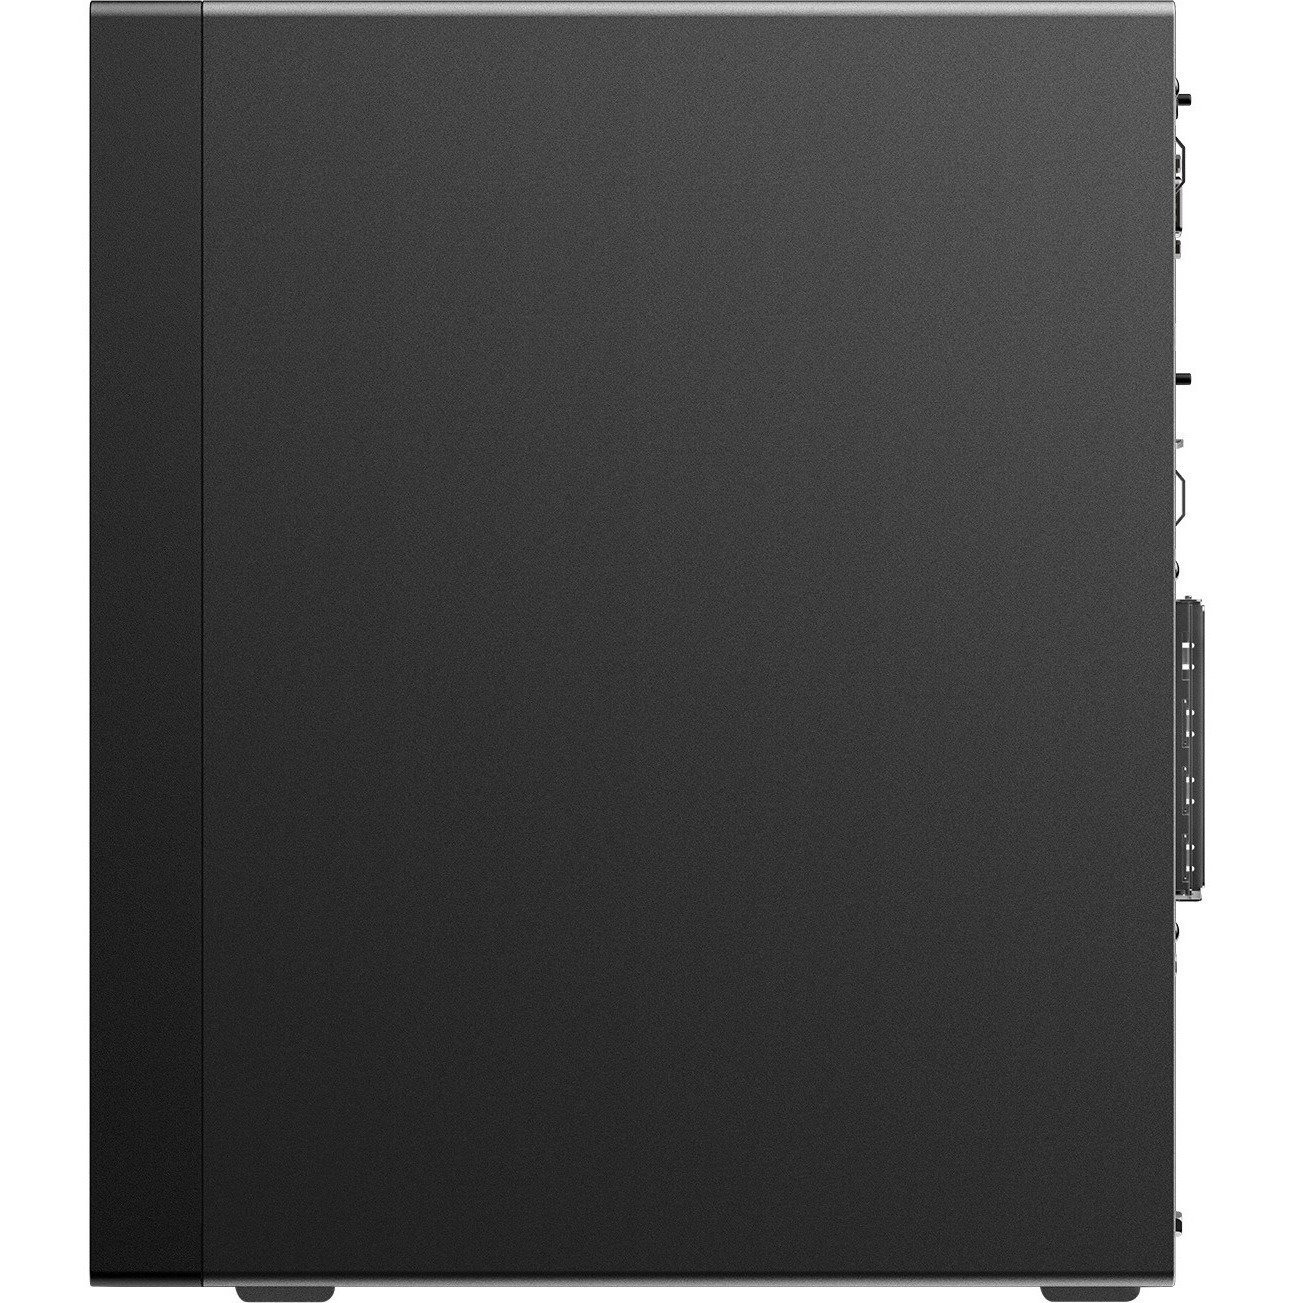 Lenovo ThinkStation P350 30E3009WUS Workstation - 1 x Intel Core i7 11th Gen i7-11700 - 16 GB - 512 GB SSD - Tower